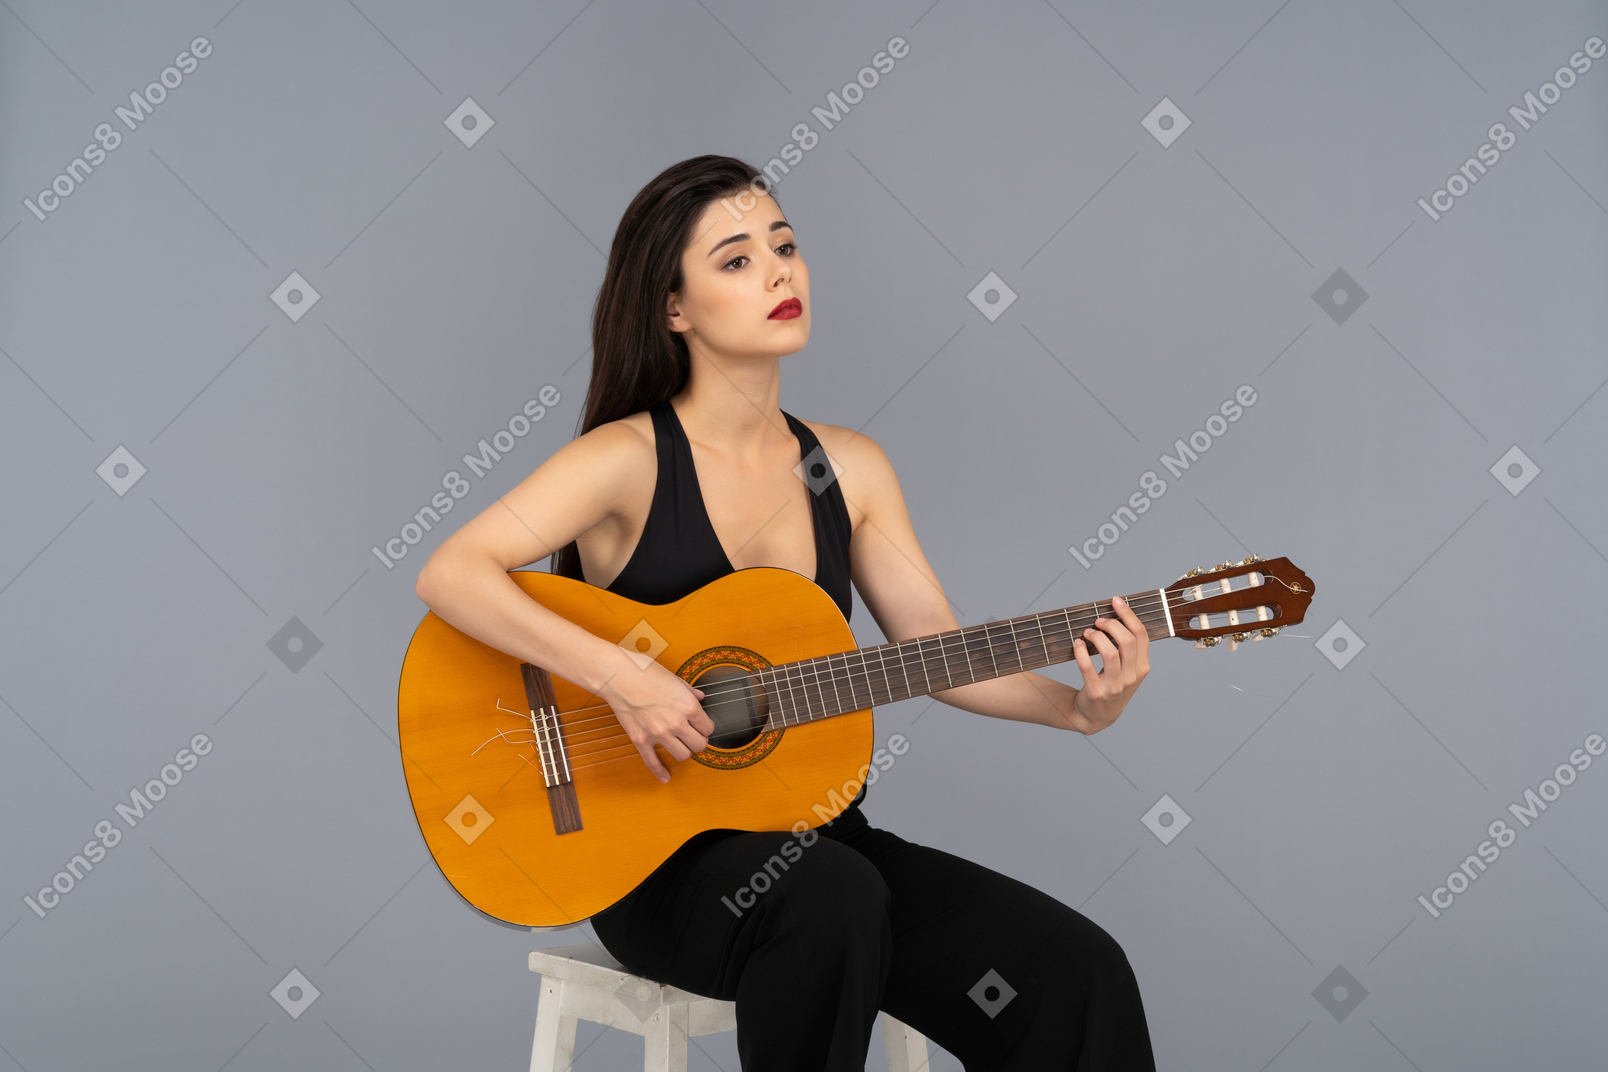 Thoughtful young woman playing guitar